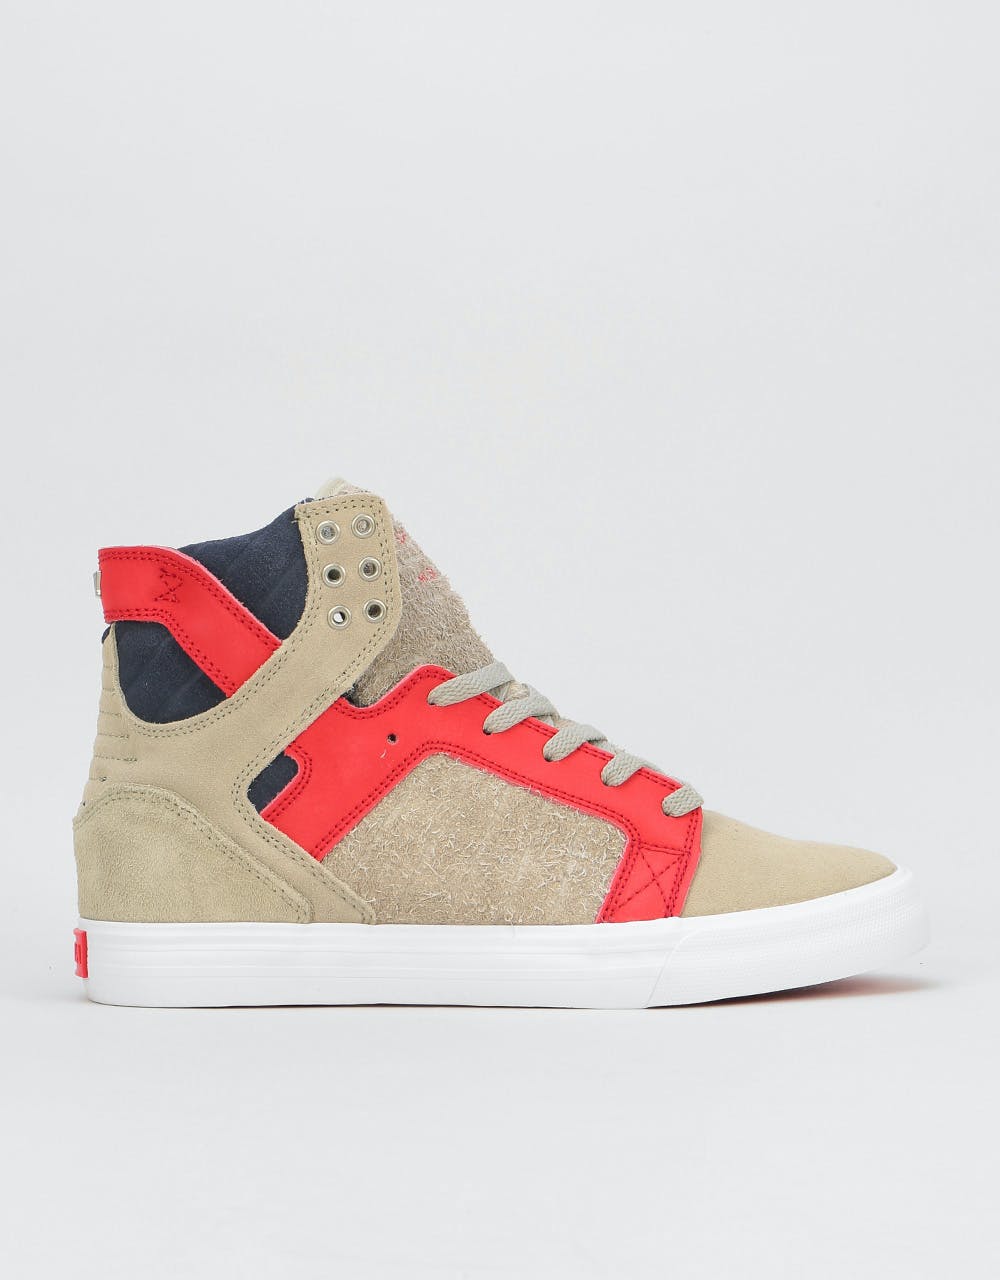 Supra Skytop Skate Shoes - Stone/Risk Red-White